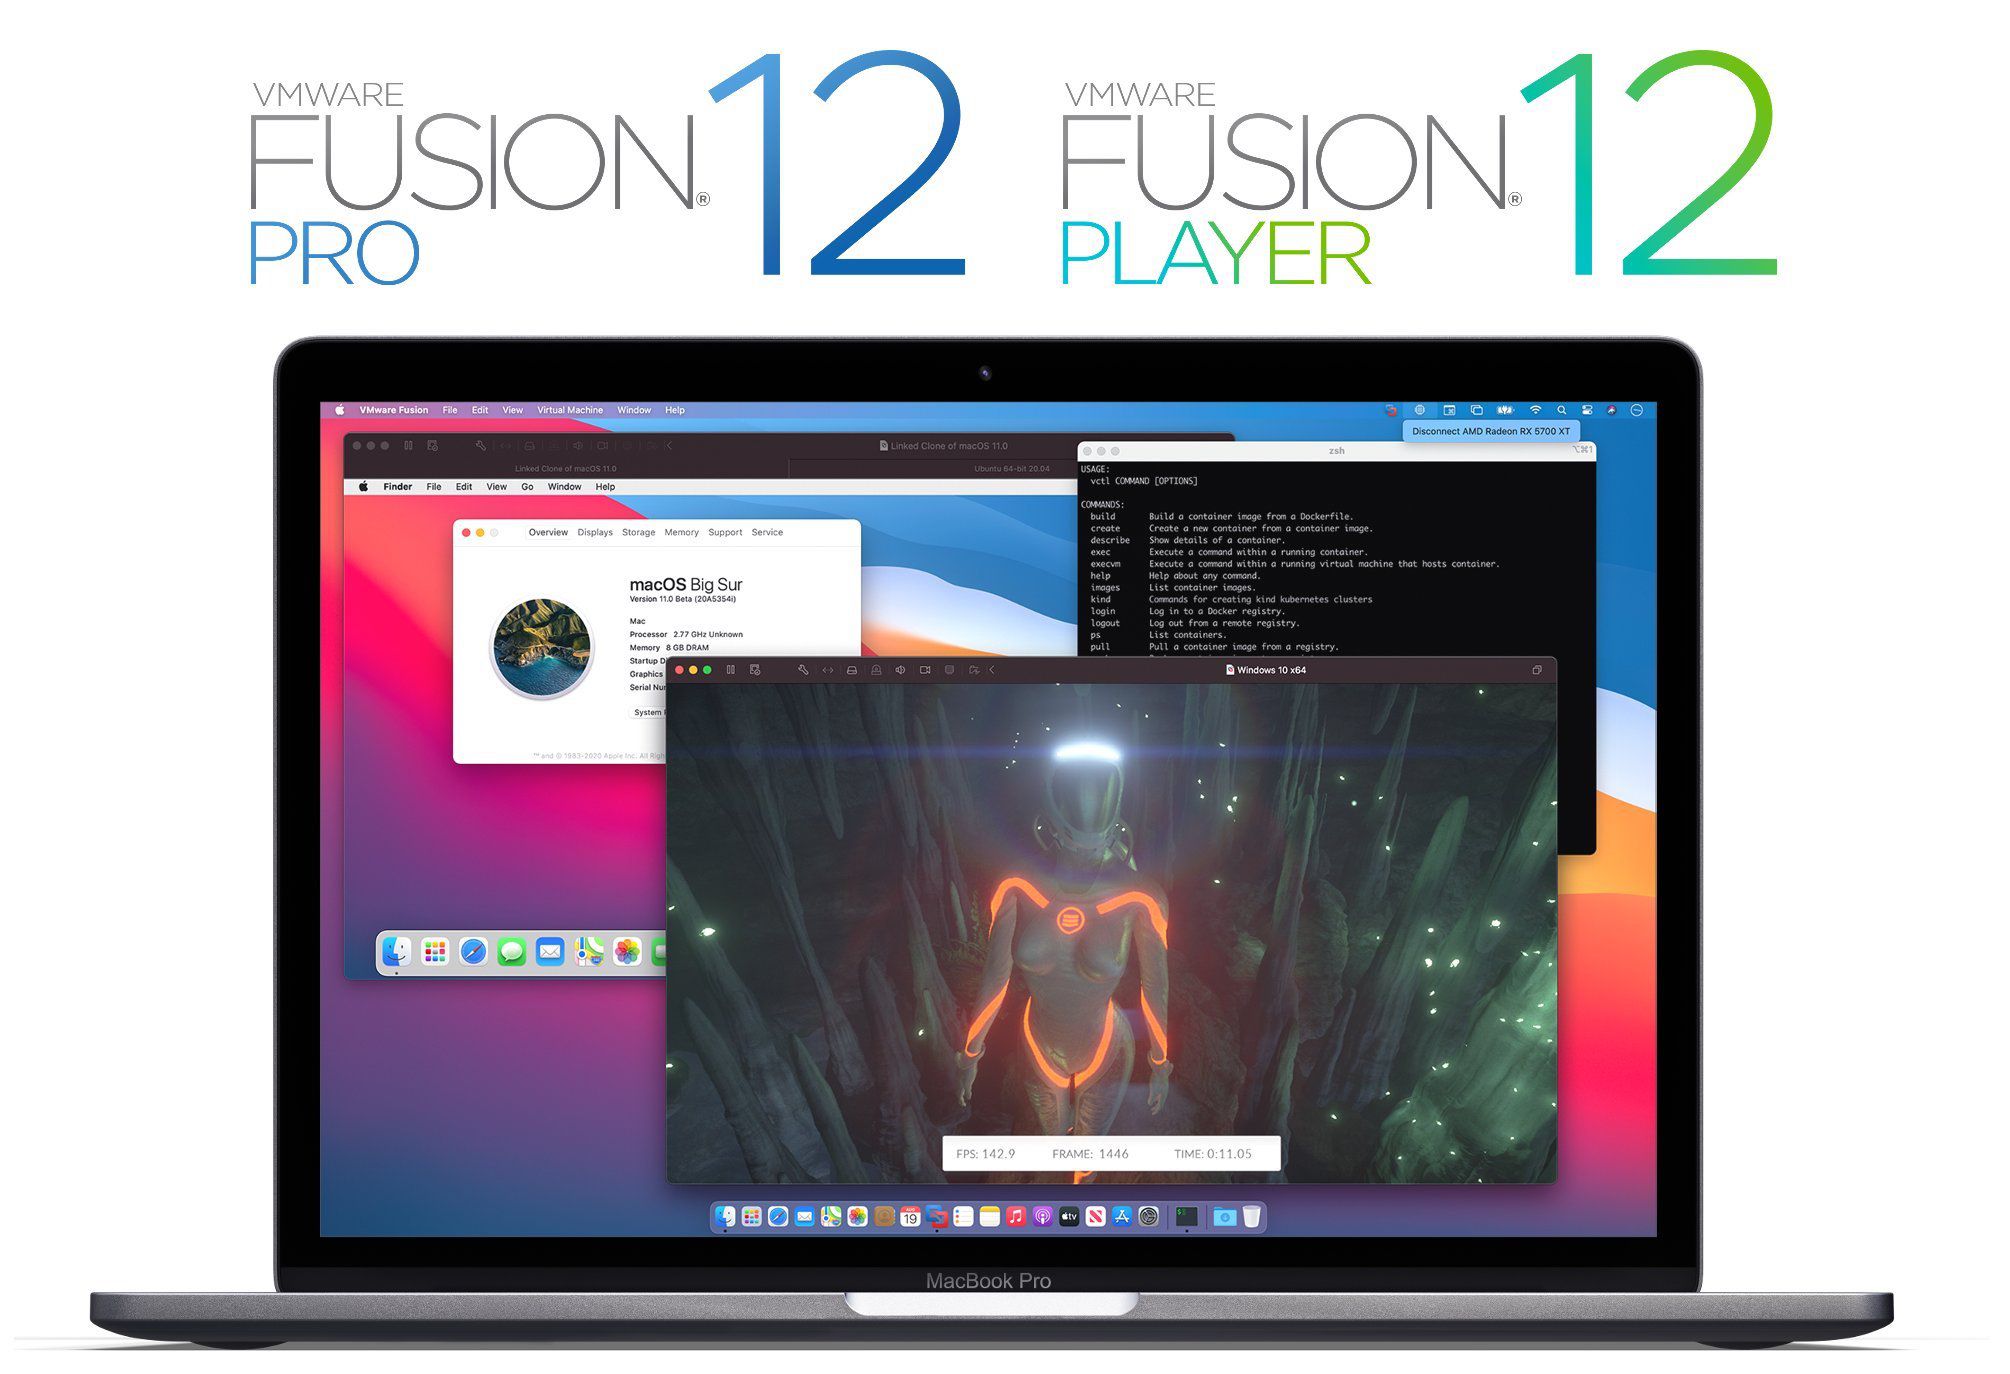 vmware fusion 7 key for mac